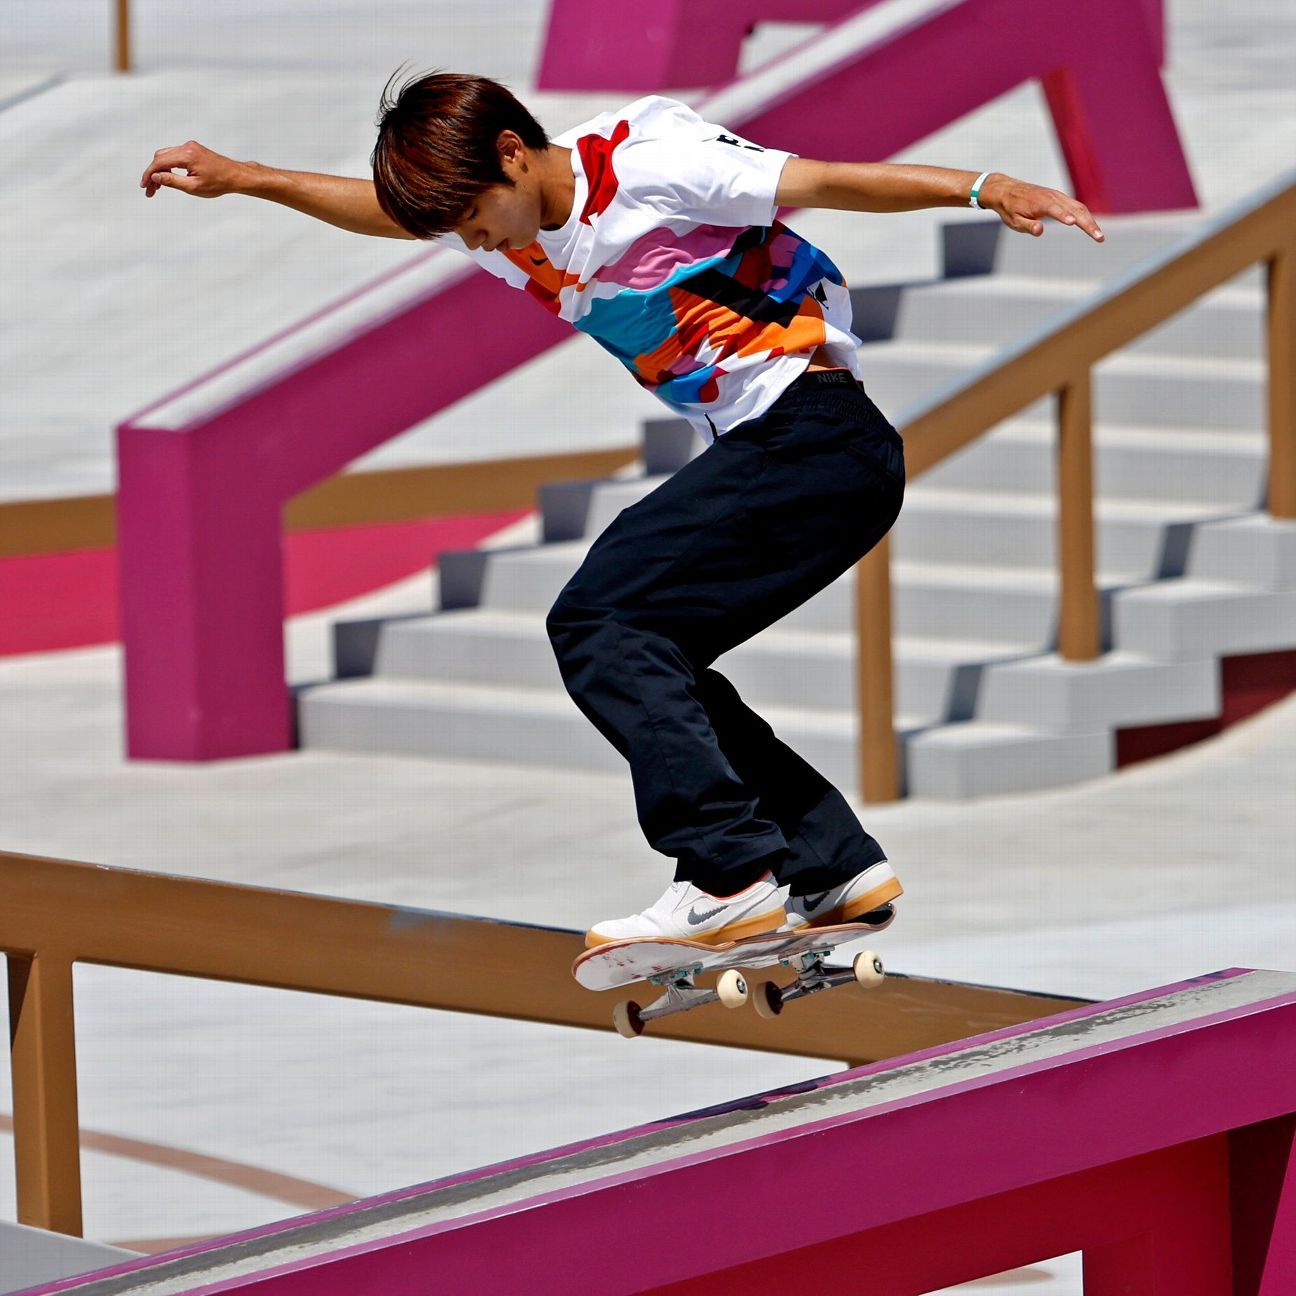 Japan's Yuto Horigome wins Olympics' first-ever skateboarding gold medal - ESPN